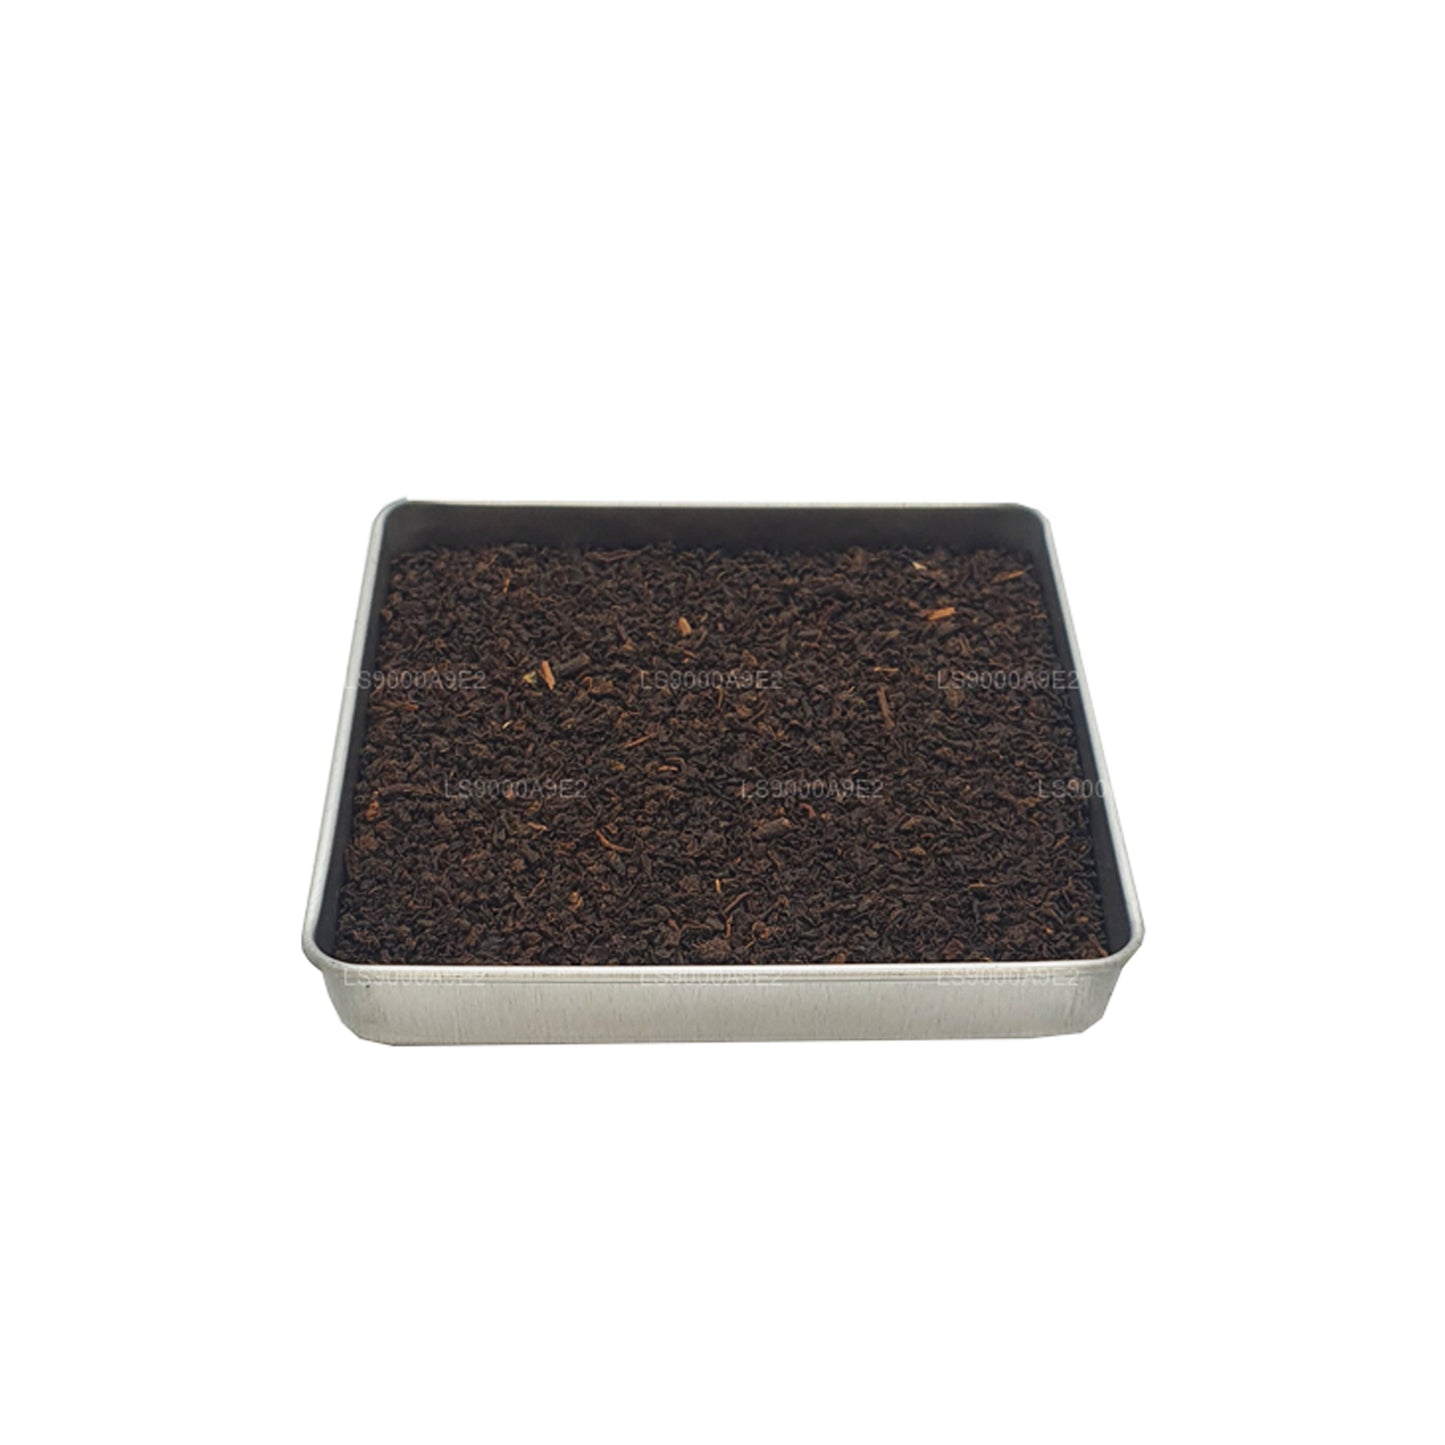 Lakpura Single Estate (Kenilworth) PEKOE Grade Ceylon Czarna herbata (100g)